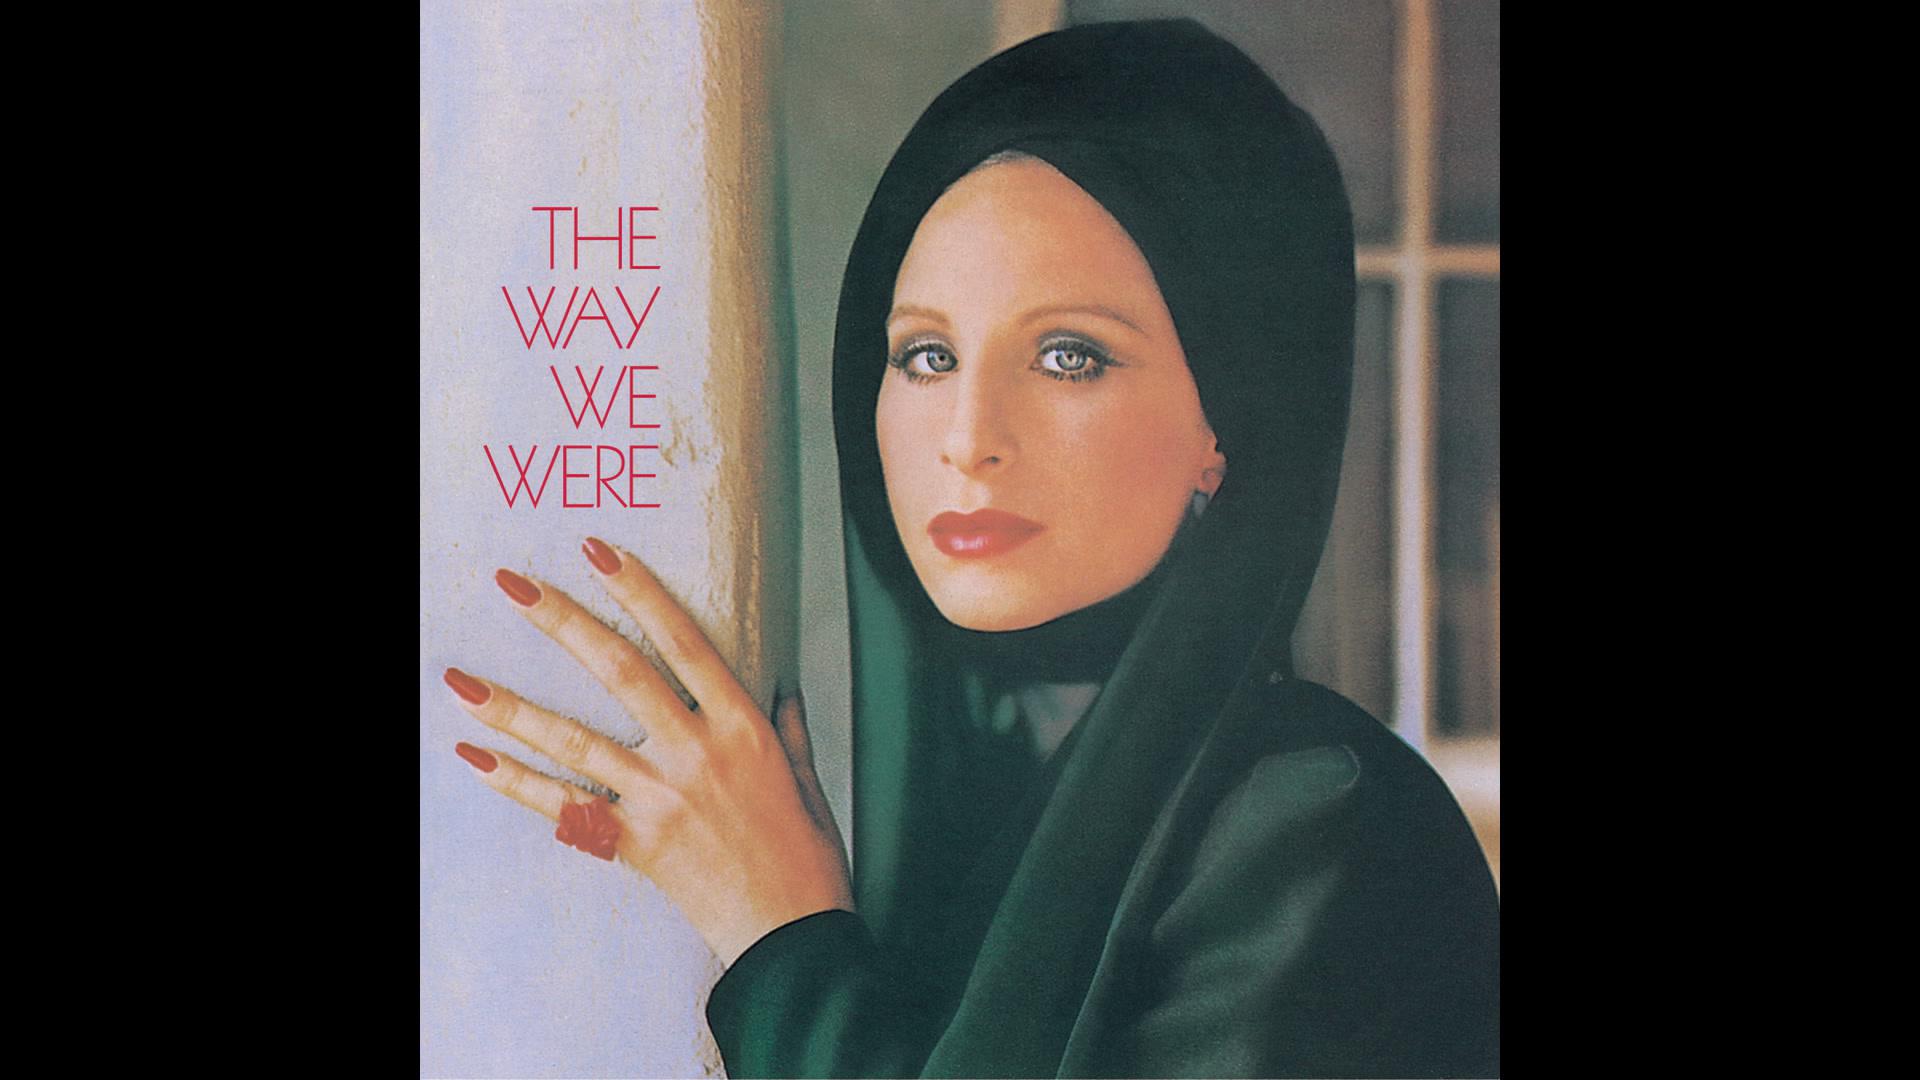 Barbra Streisand - The Way We Were (Official Audio)